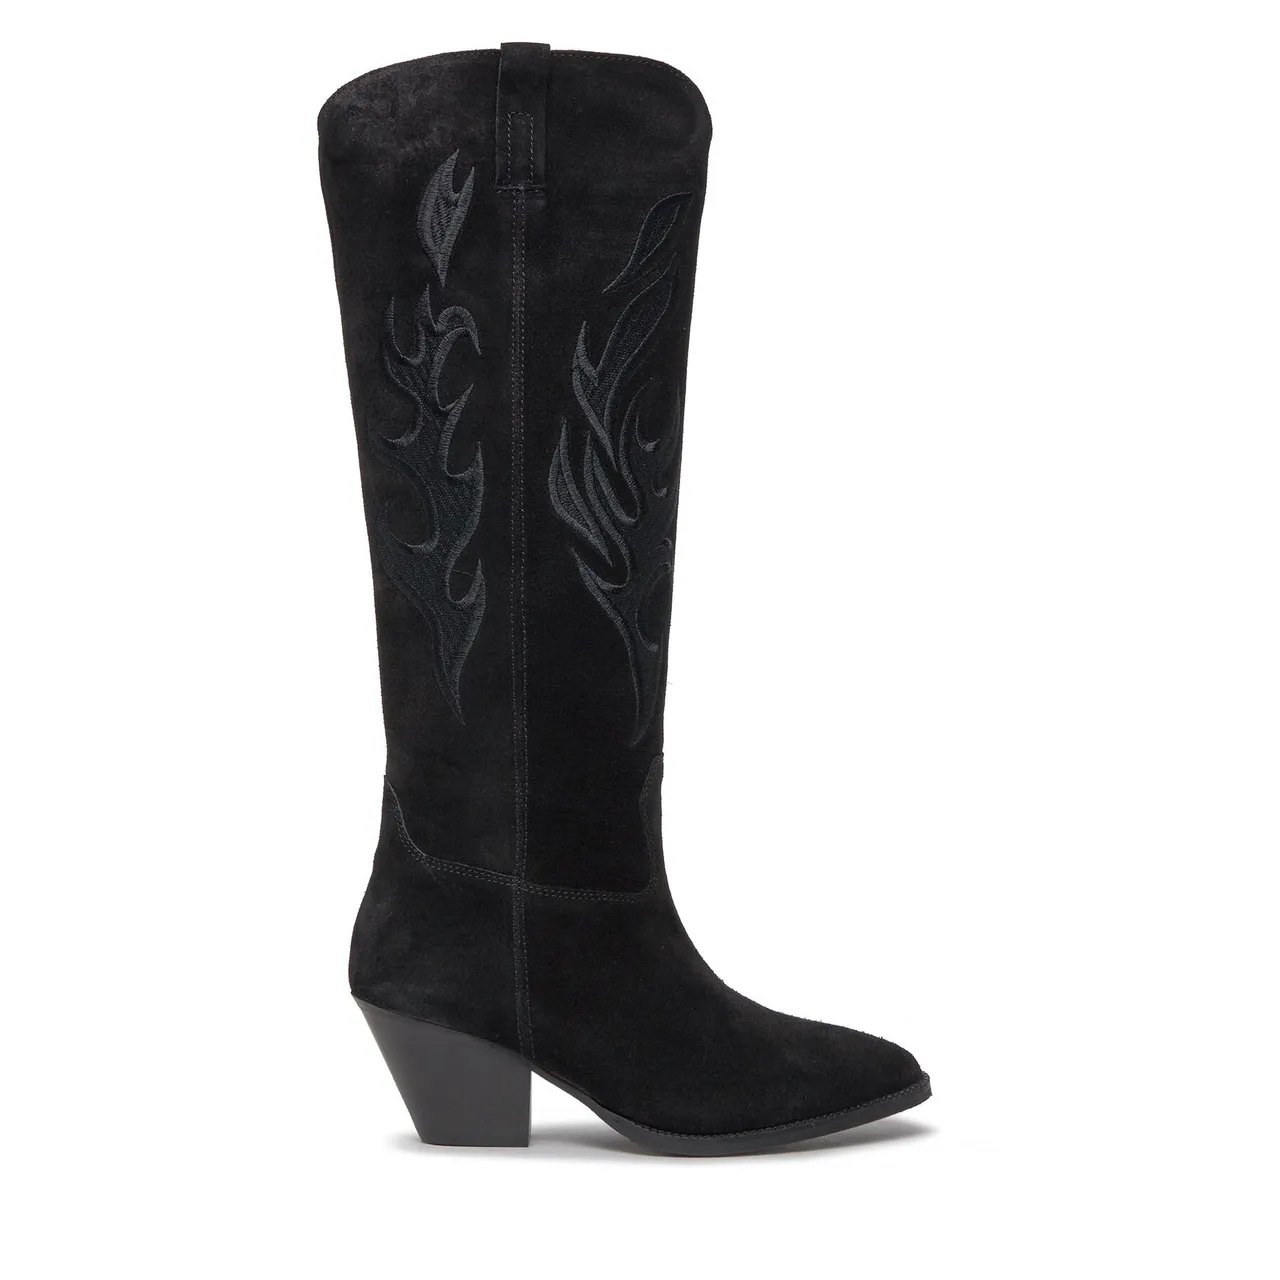 Stiefel Bronx High boots 14297-C Black 01